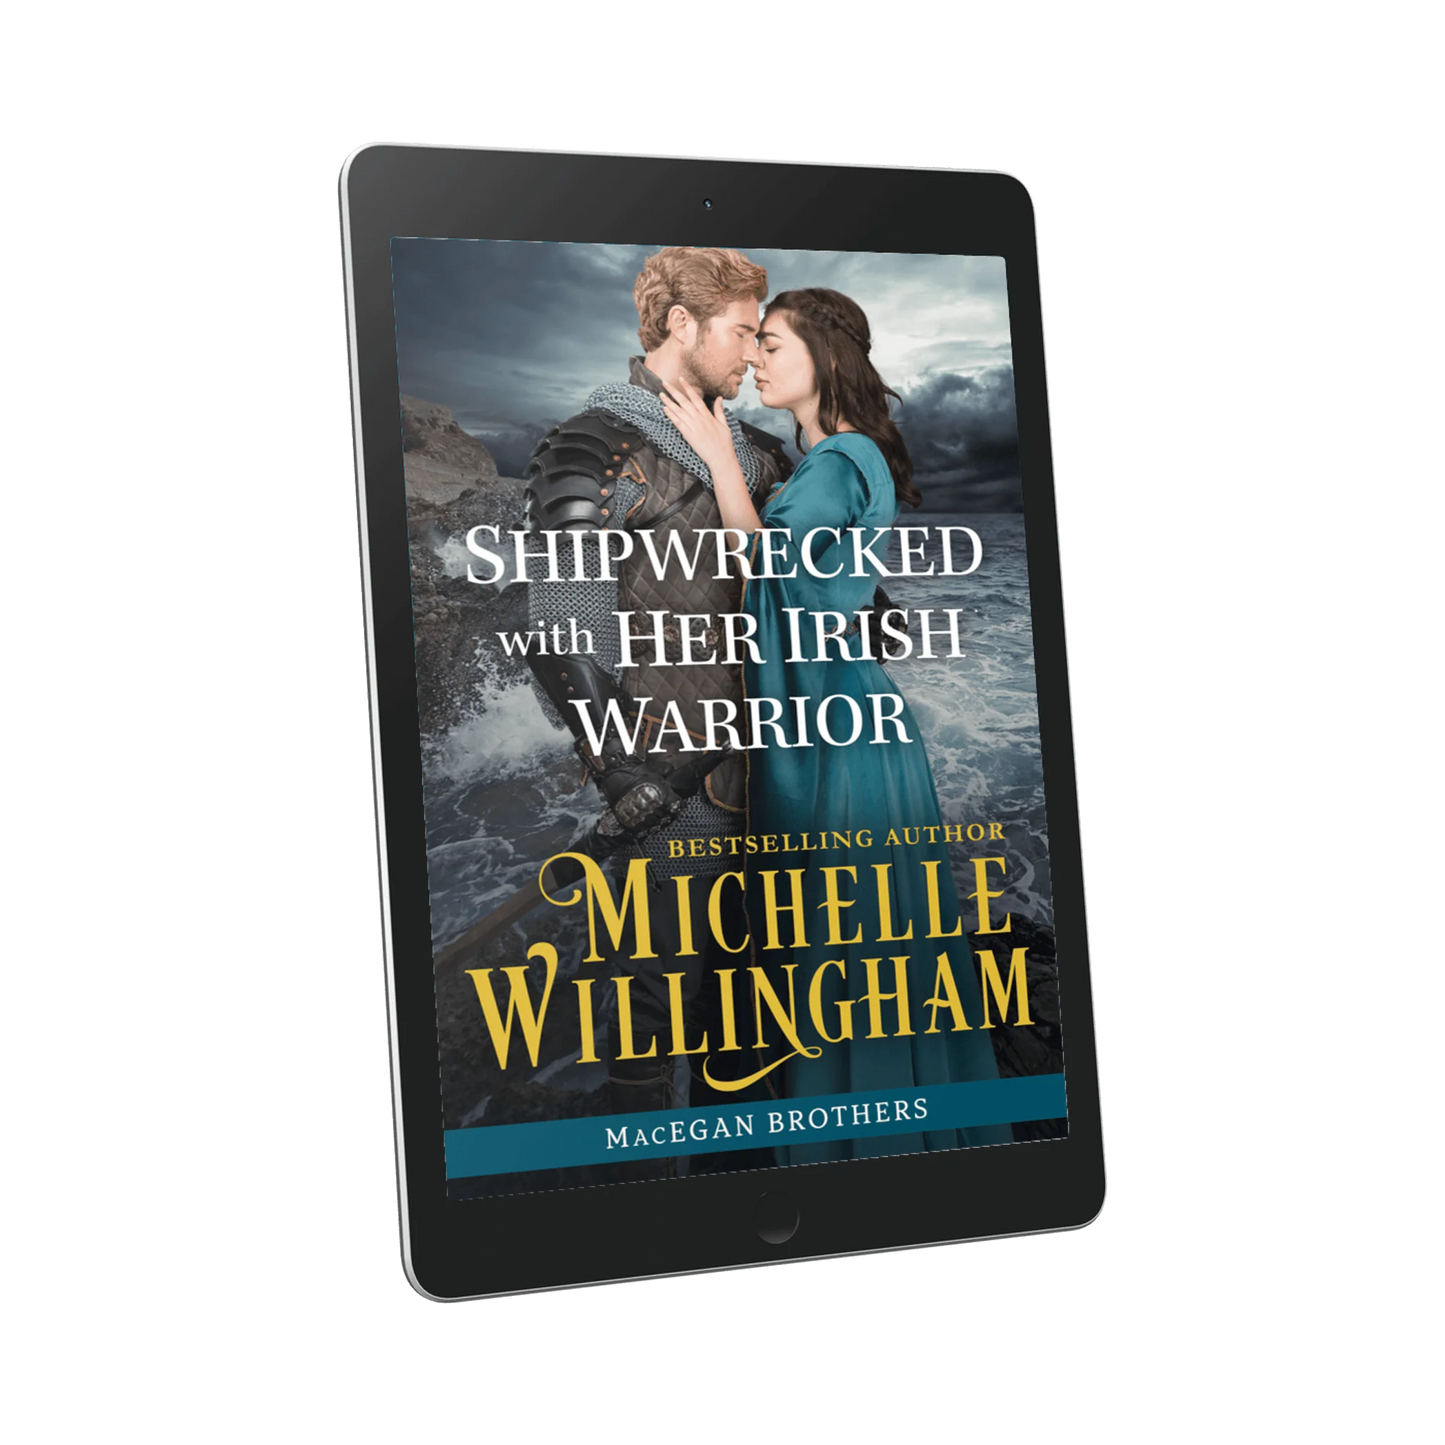 Shipwrecked with Her Irish Warrior